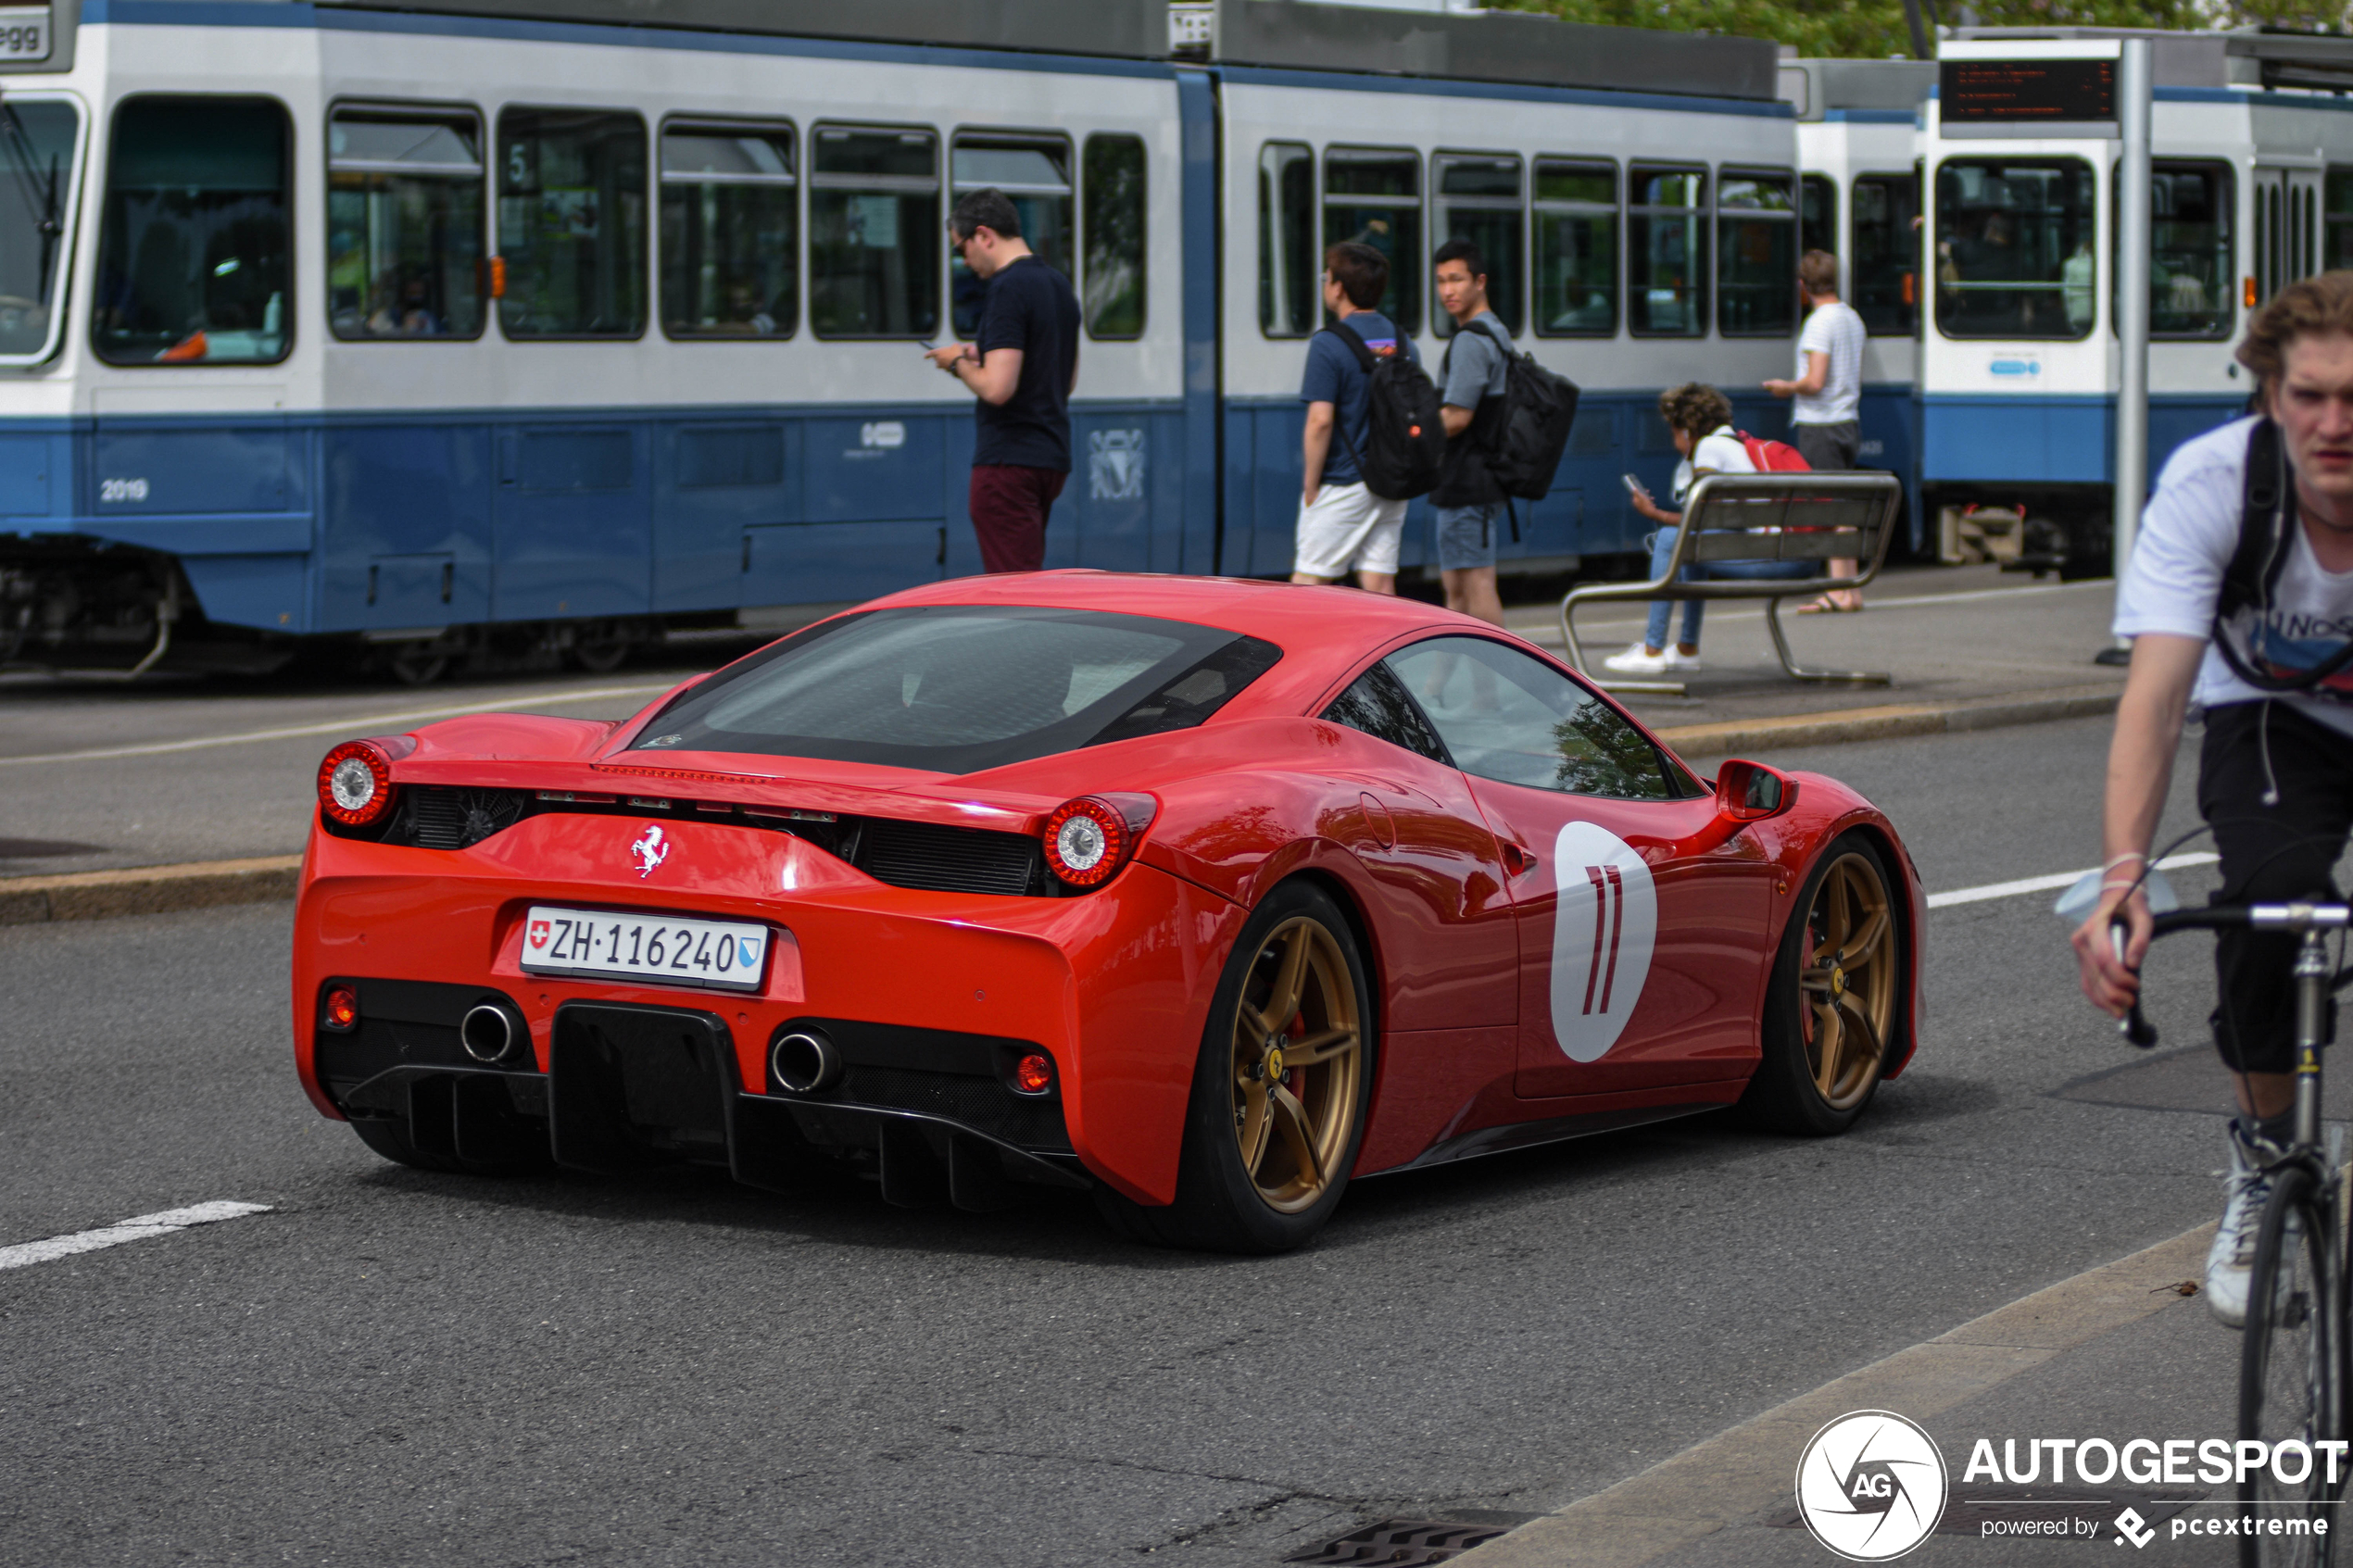 This Ferrari has an identity crisis